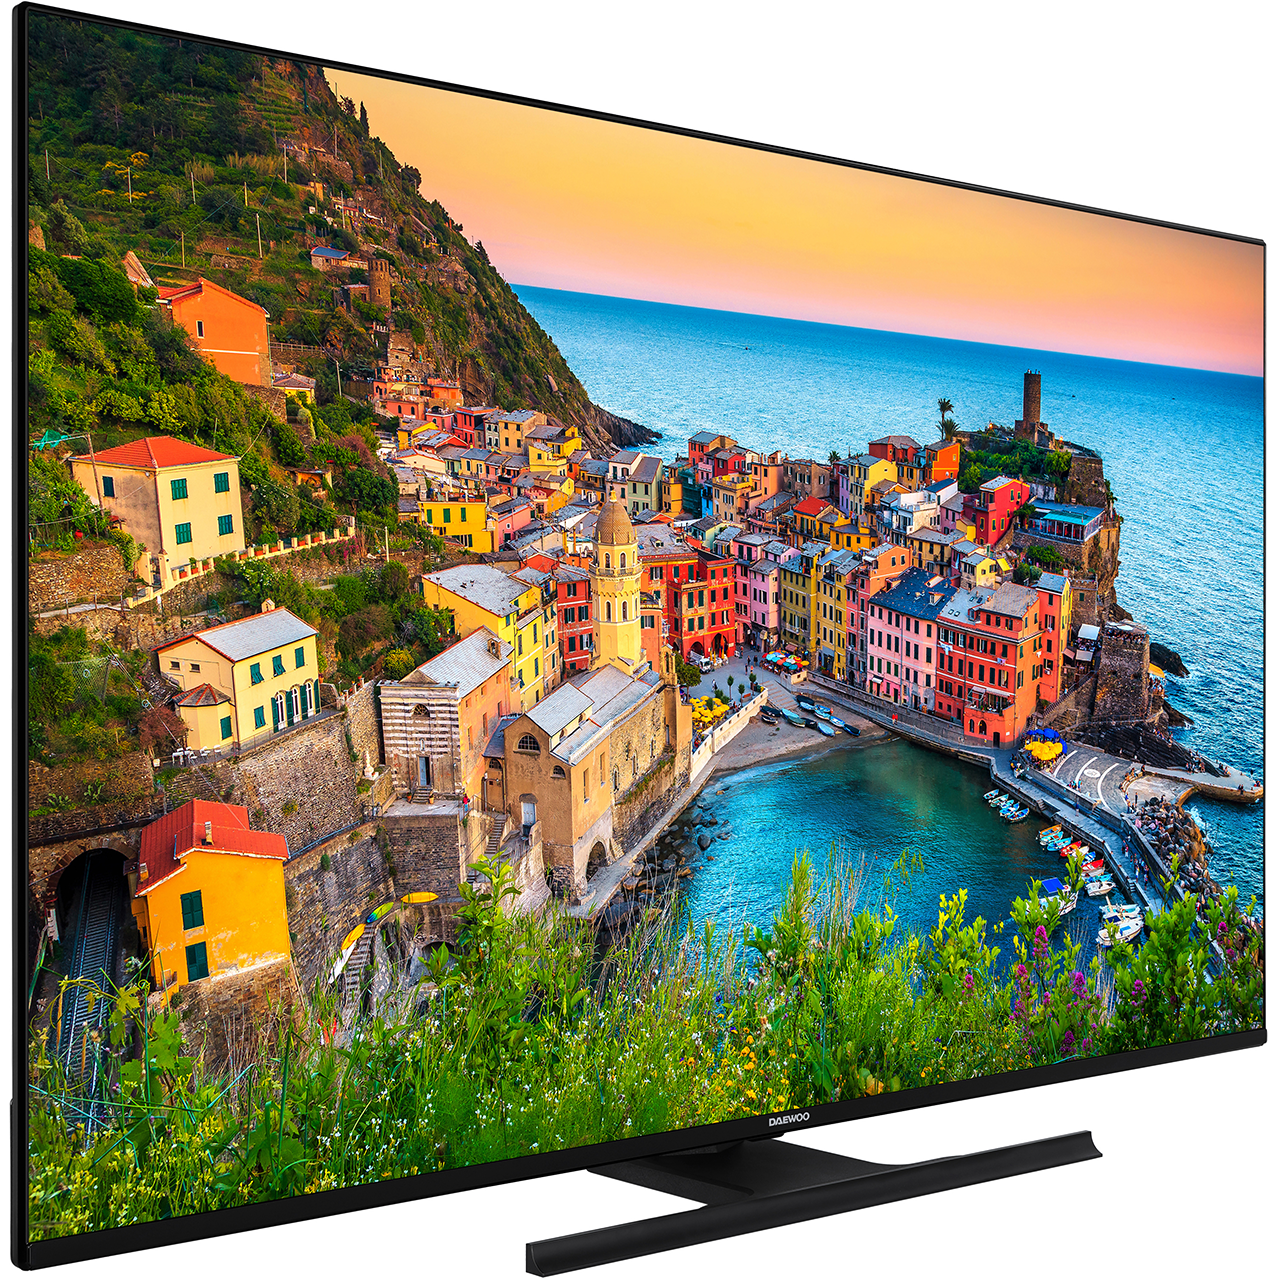 Televisor Qled Daewoo 55 4k Uhd Usb Smart Tv Android Wifi